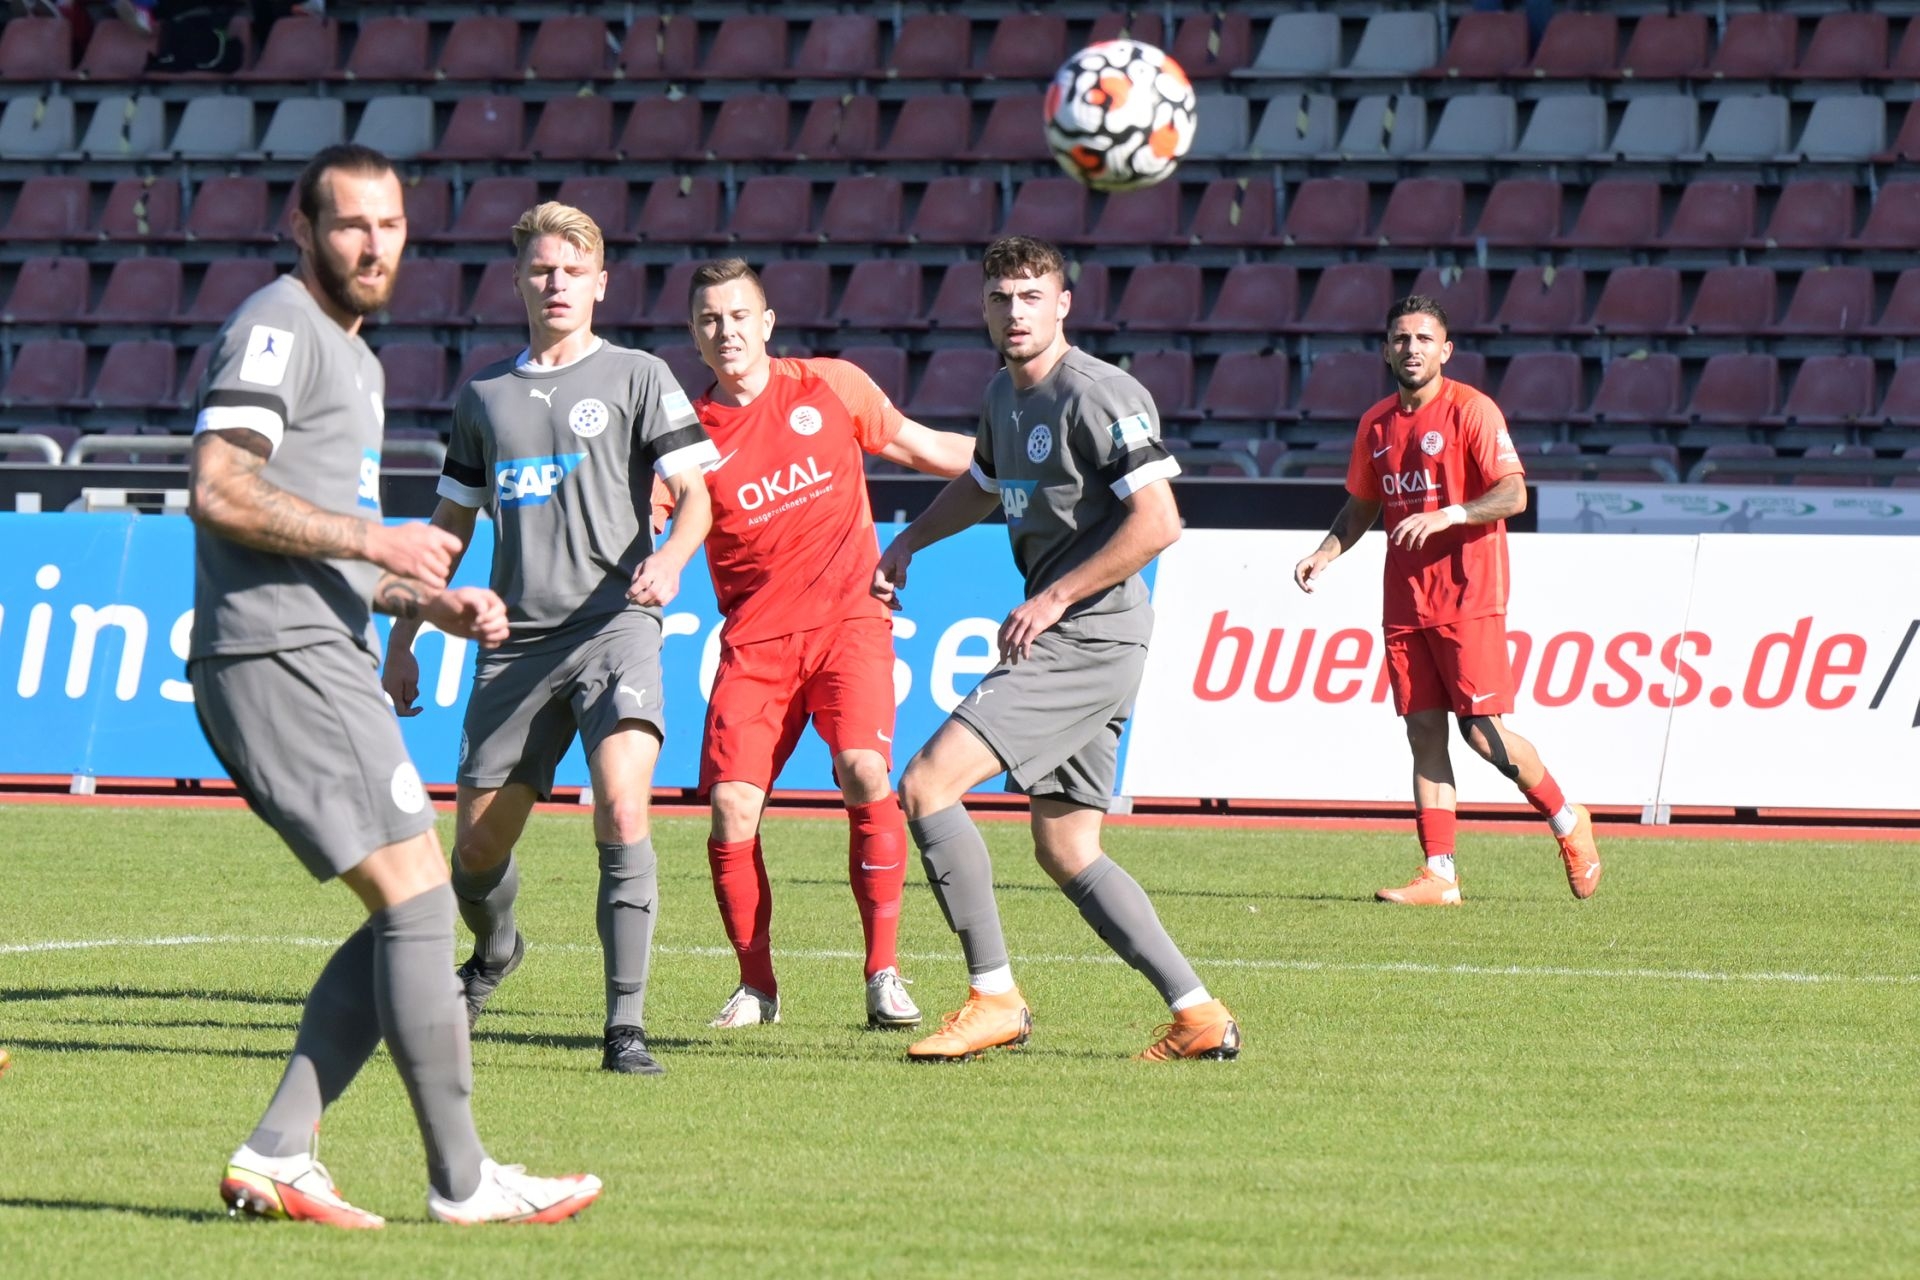 Regionalliga Südwest, Saison 2021/22, KSV Hessen Kassel, FC Astoria Walldorf, Endsatnd 0:2